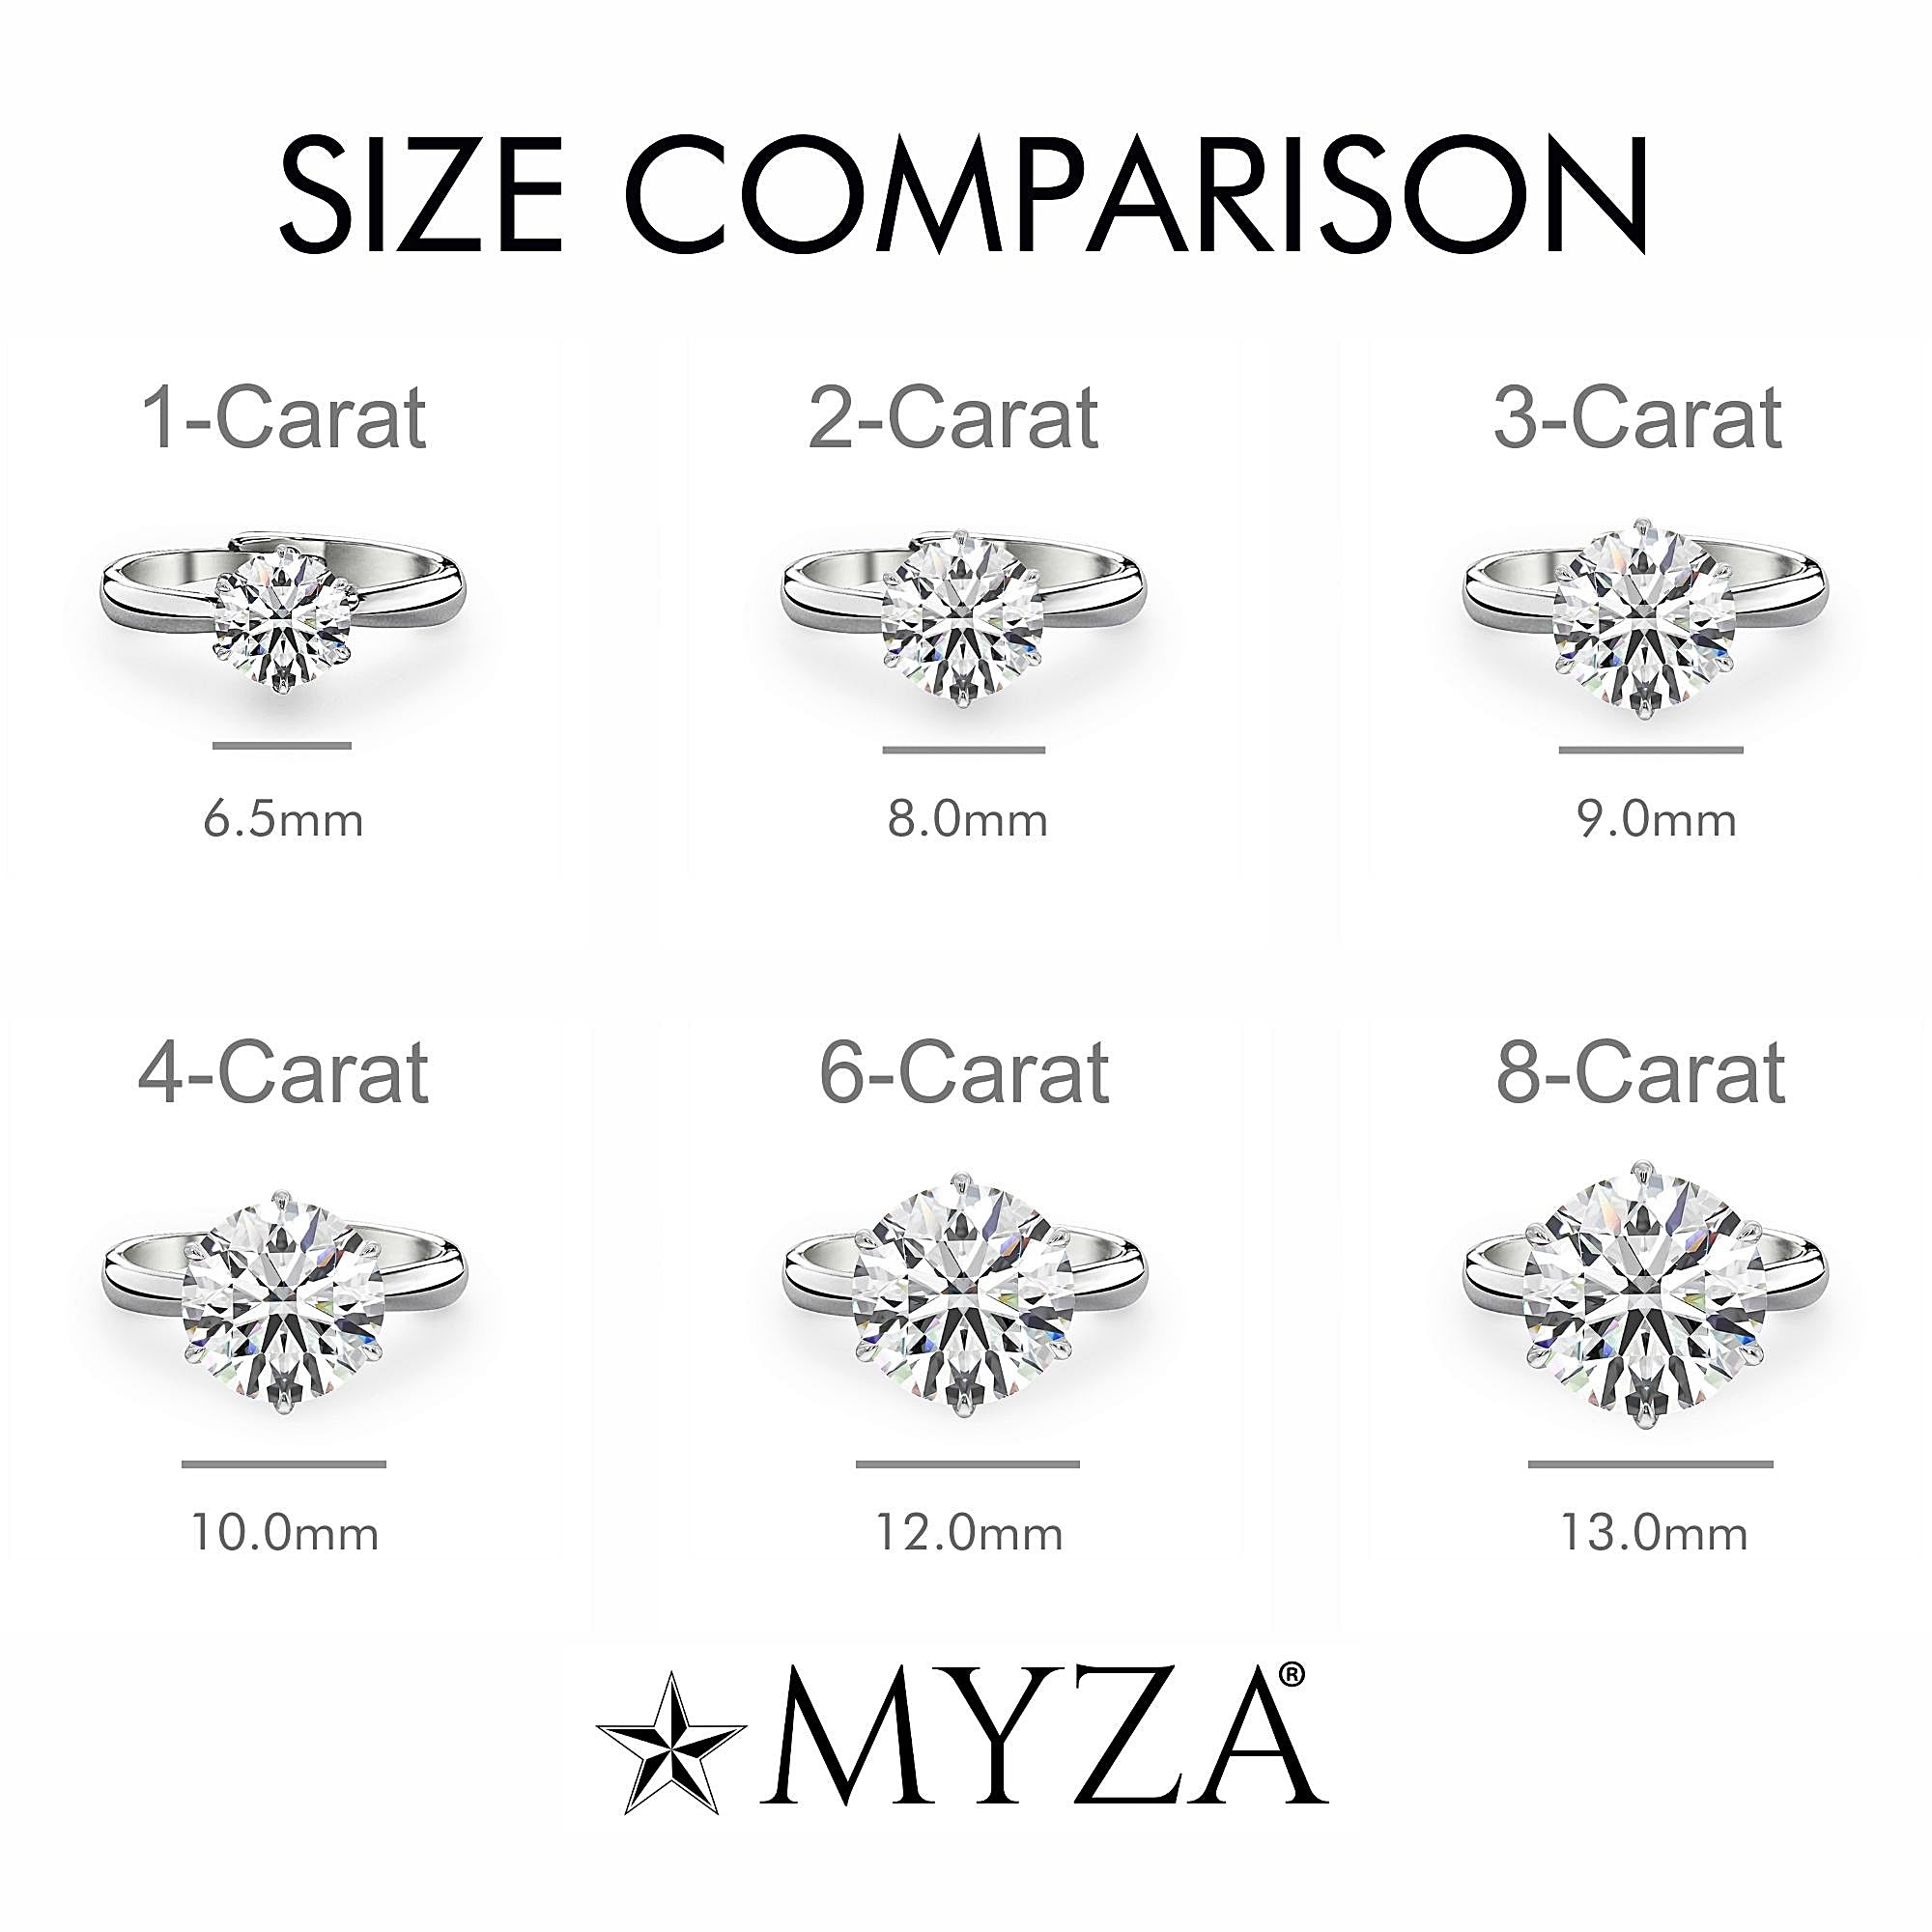 1-Carat MYZA Sterling Silver Ring - MYZA 